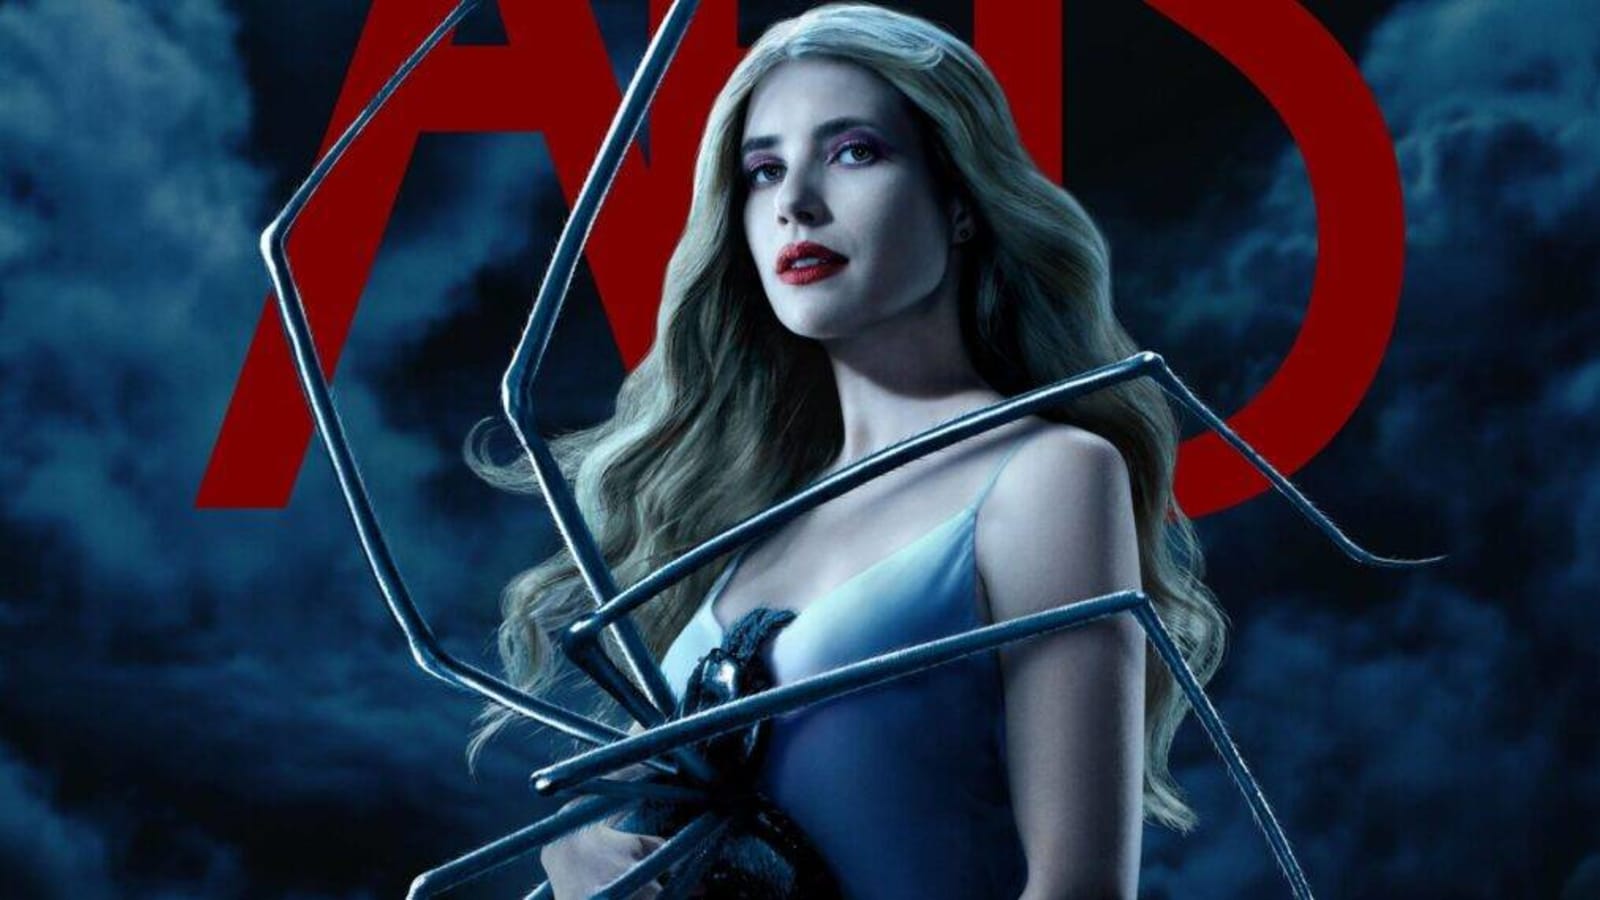 ‘American Horror Story’ With Kim Kardashian & Emma Roberts Sets Season 12 Premiere Date for ‘Delicate’